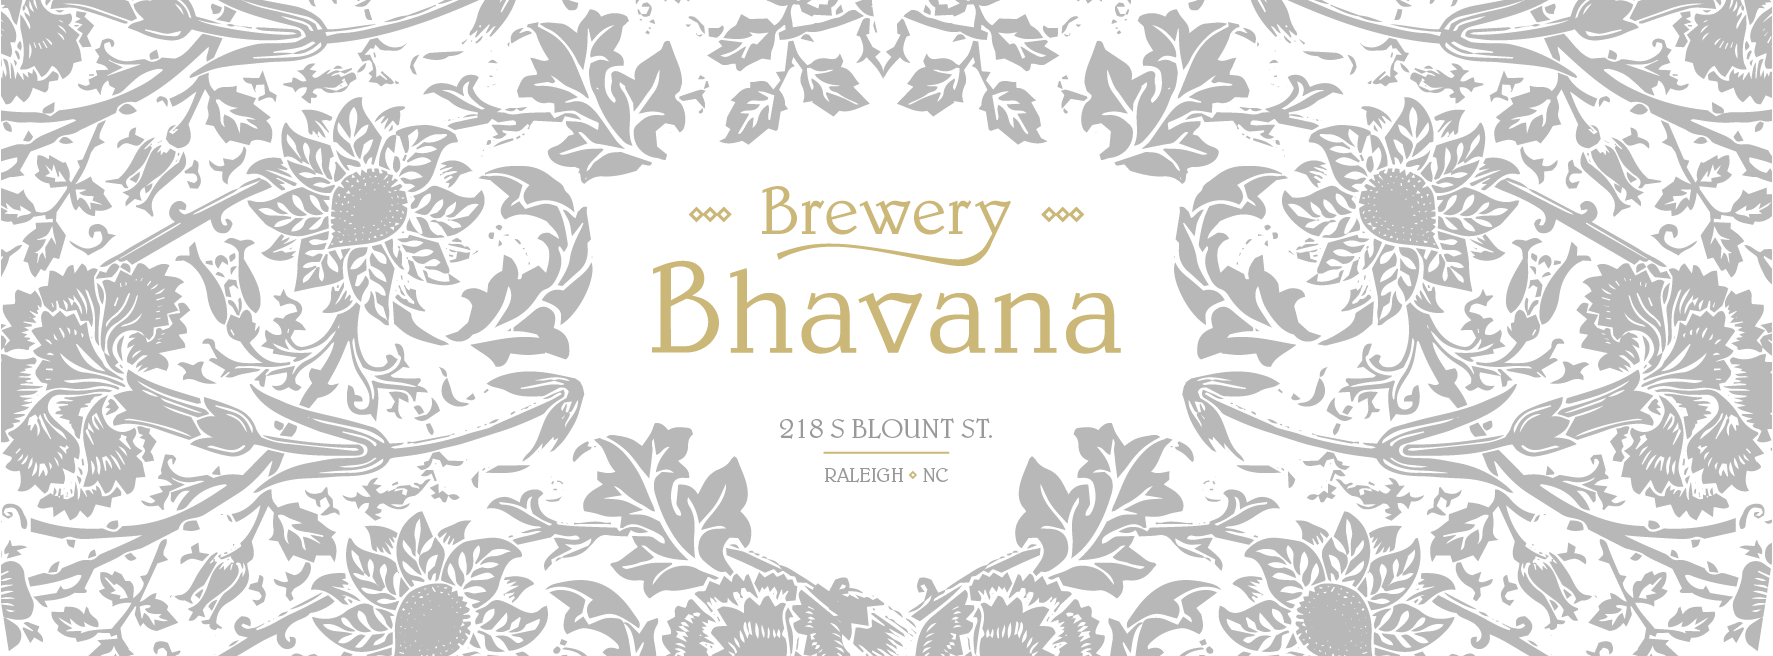 Brewery Bhavana | Boult Imperial Kvass